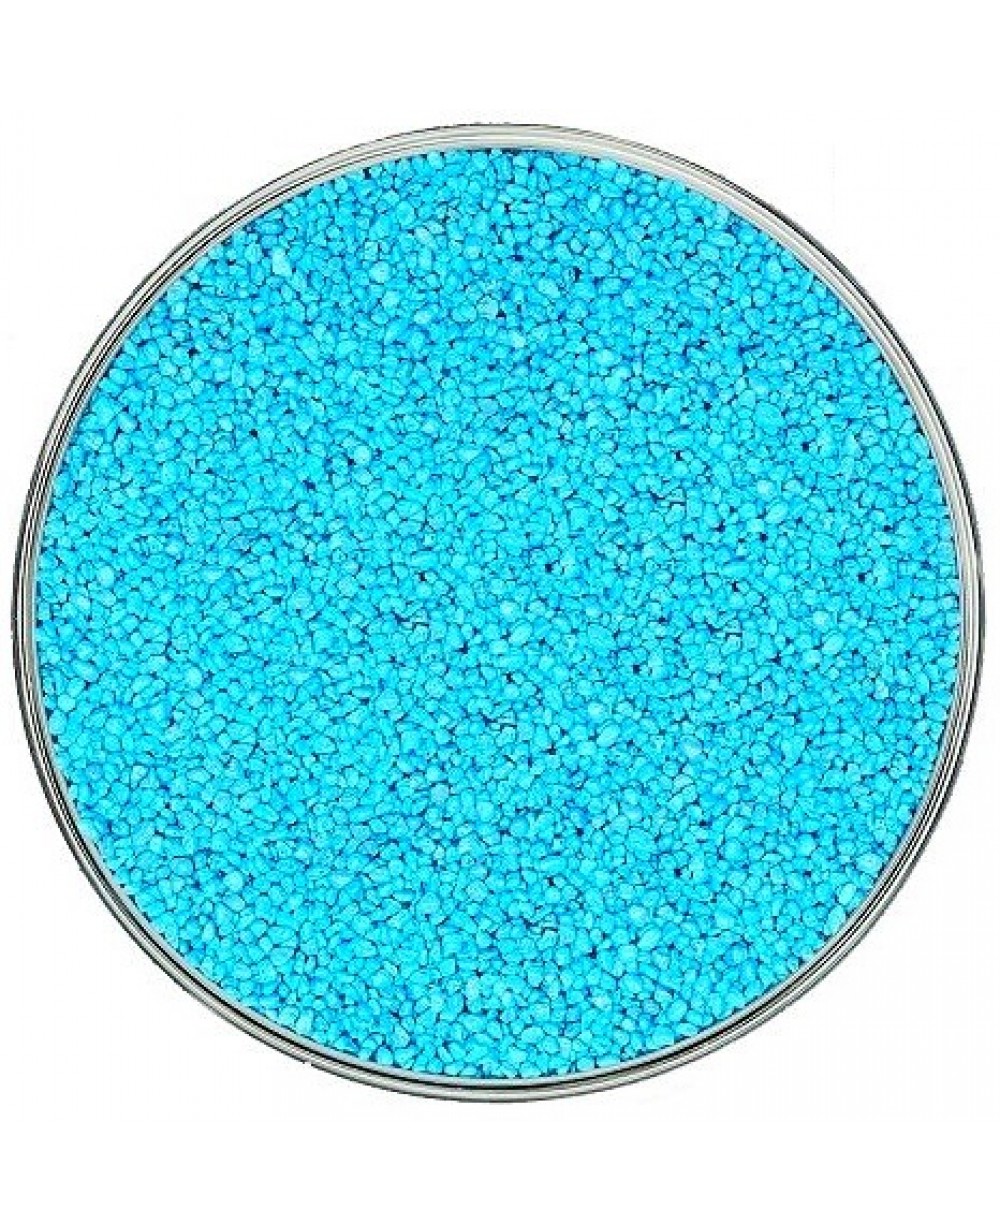 Color sand №12 Песок Голубой 1000 гр 981